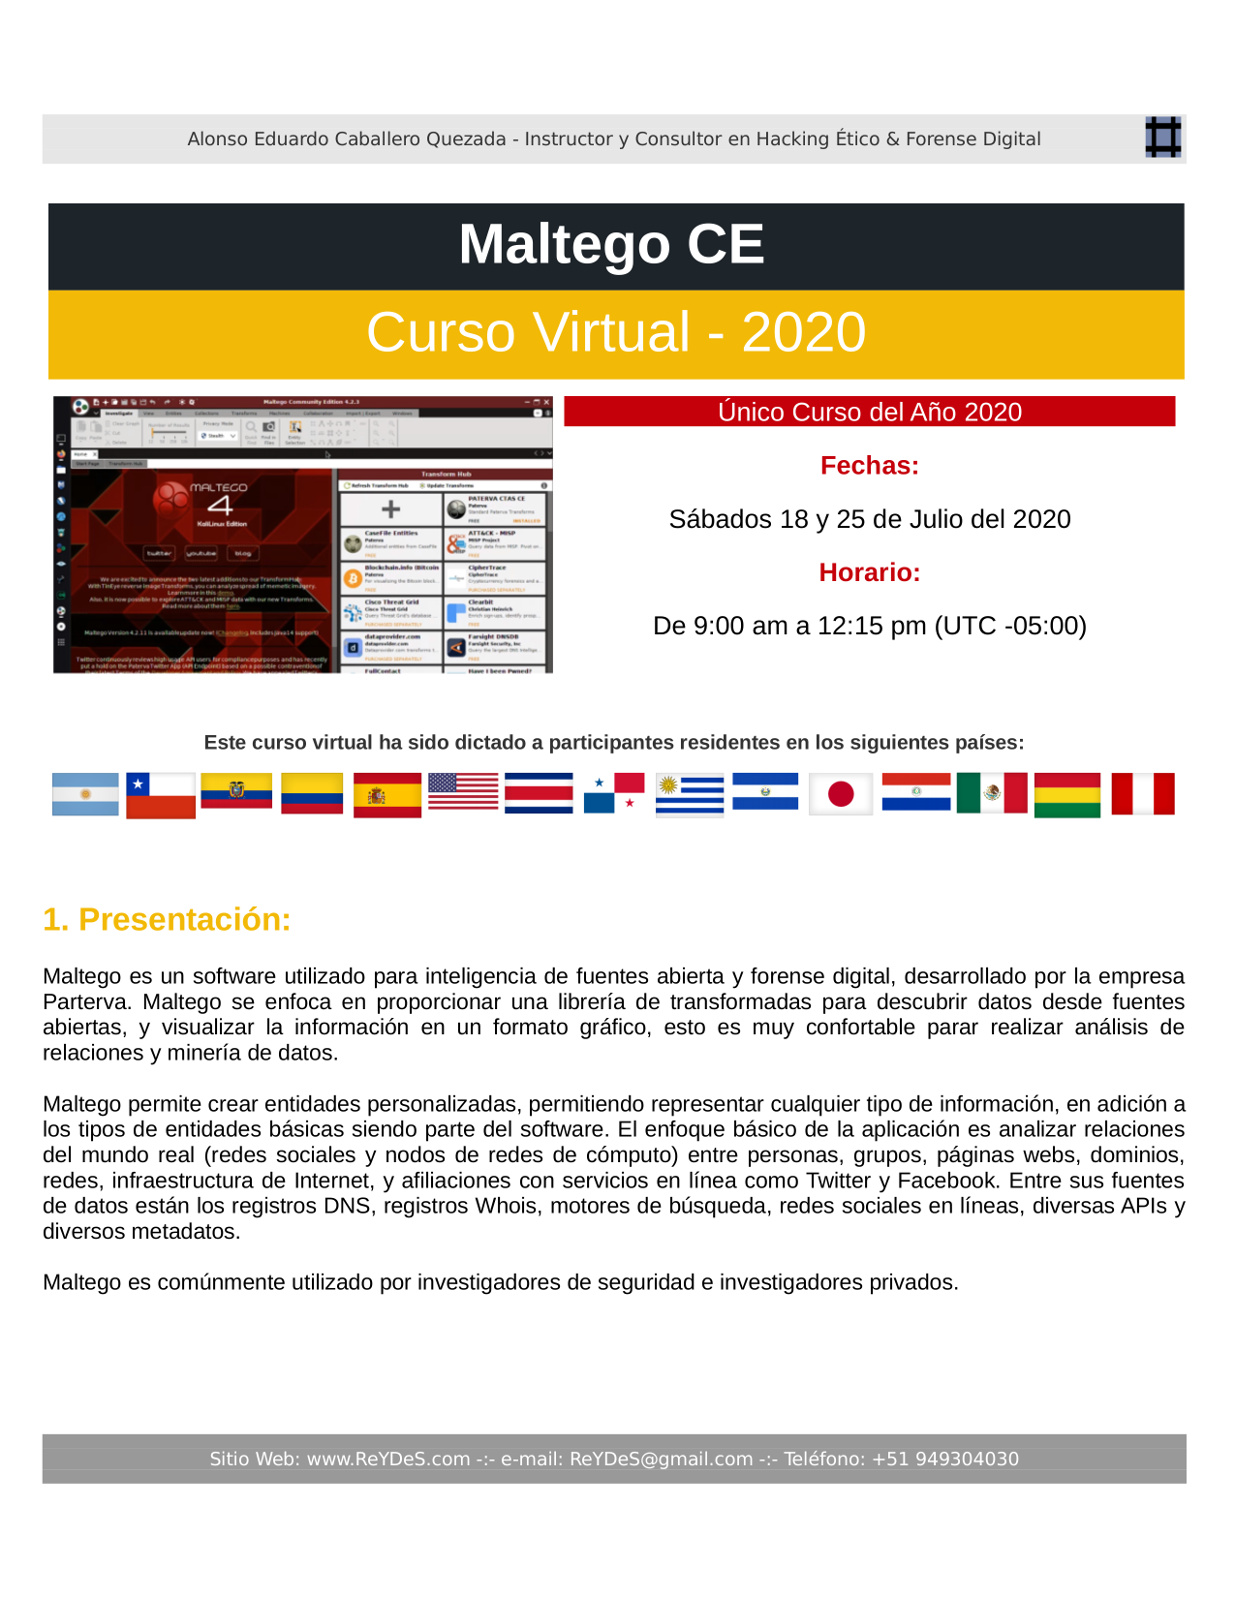 Único Curso Virtual de Maltego CE 2020